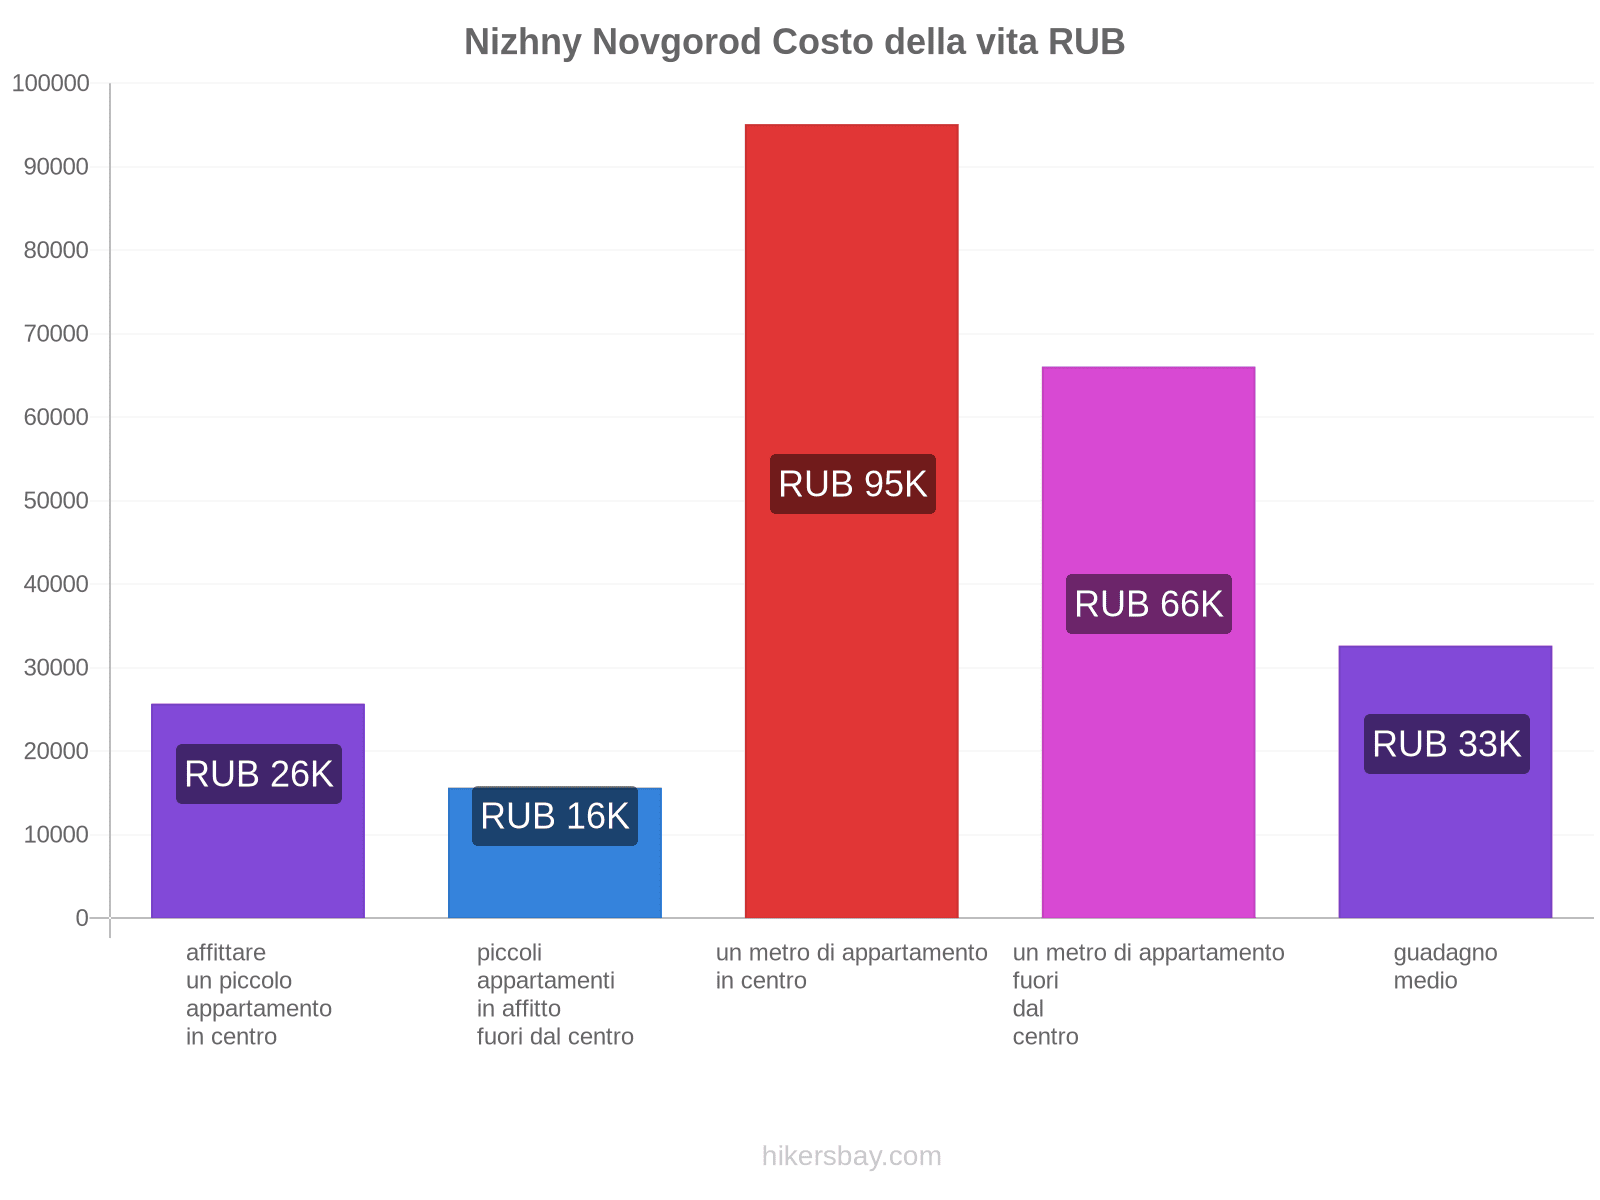 Nizhny Novgorod costo della vita hikersbay.com